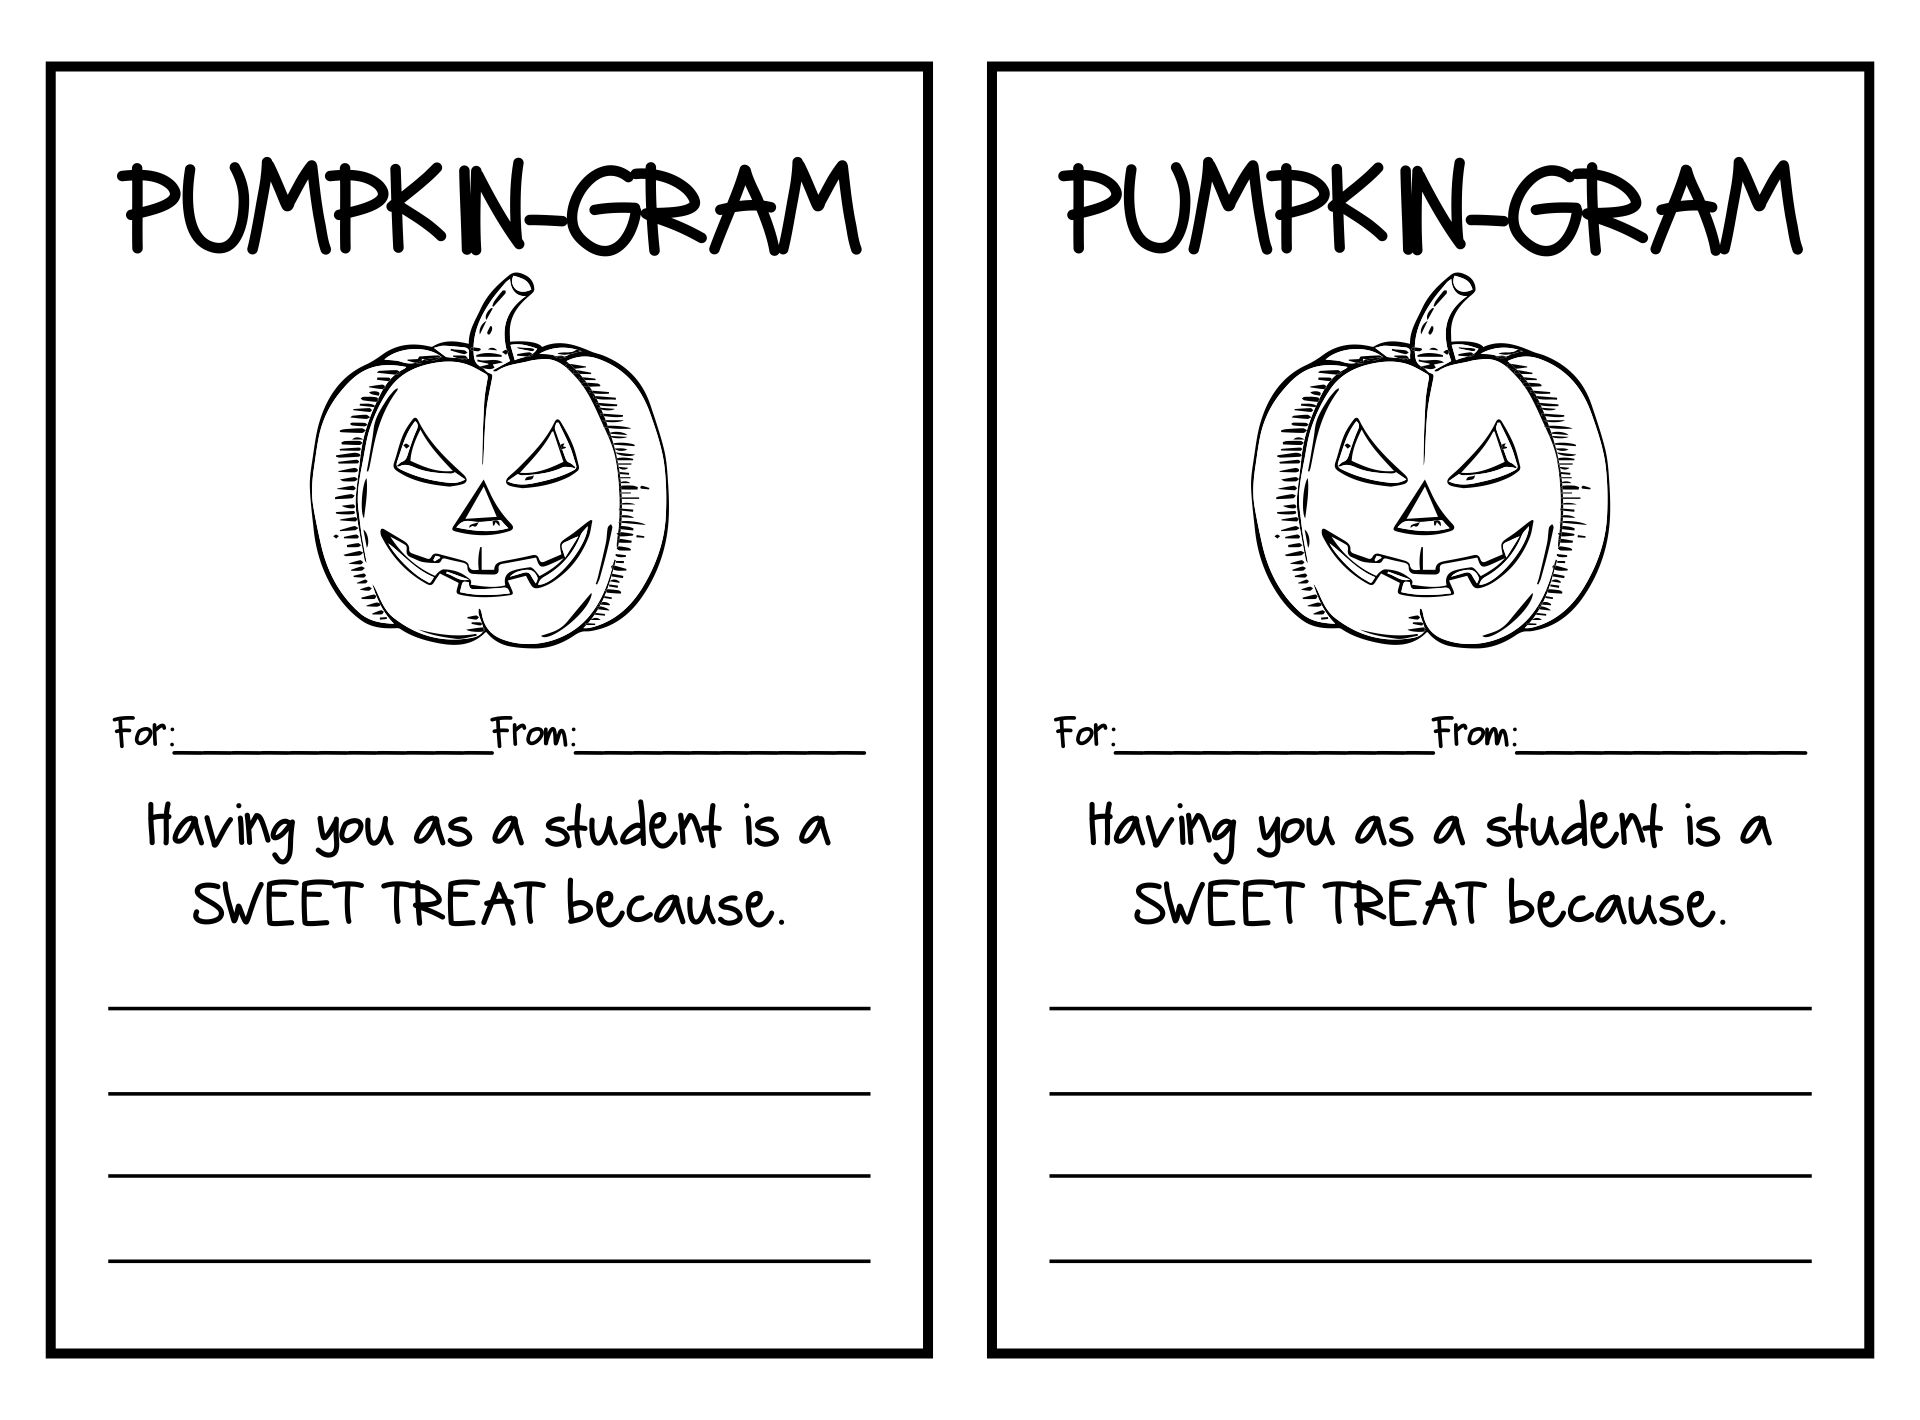 Free Printable Halloween Pumpkin Grams